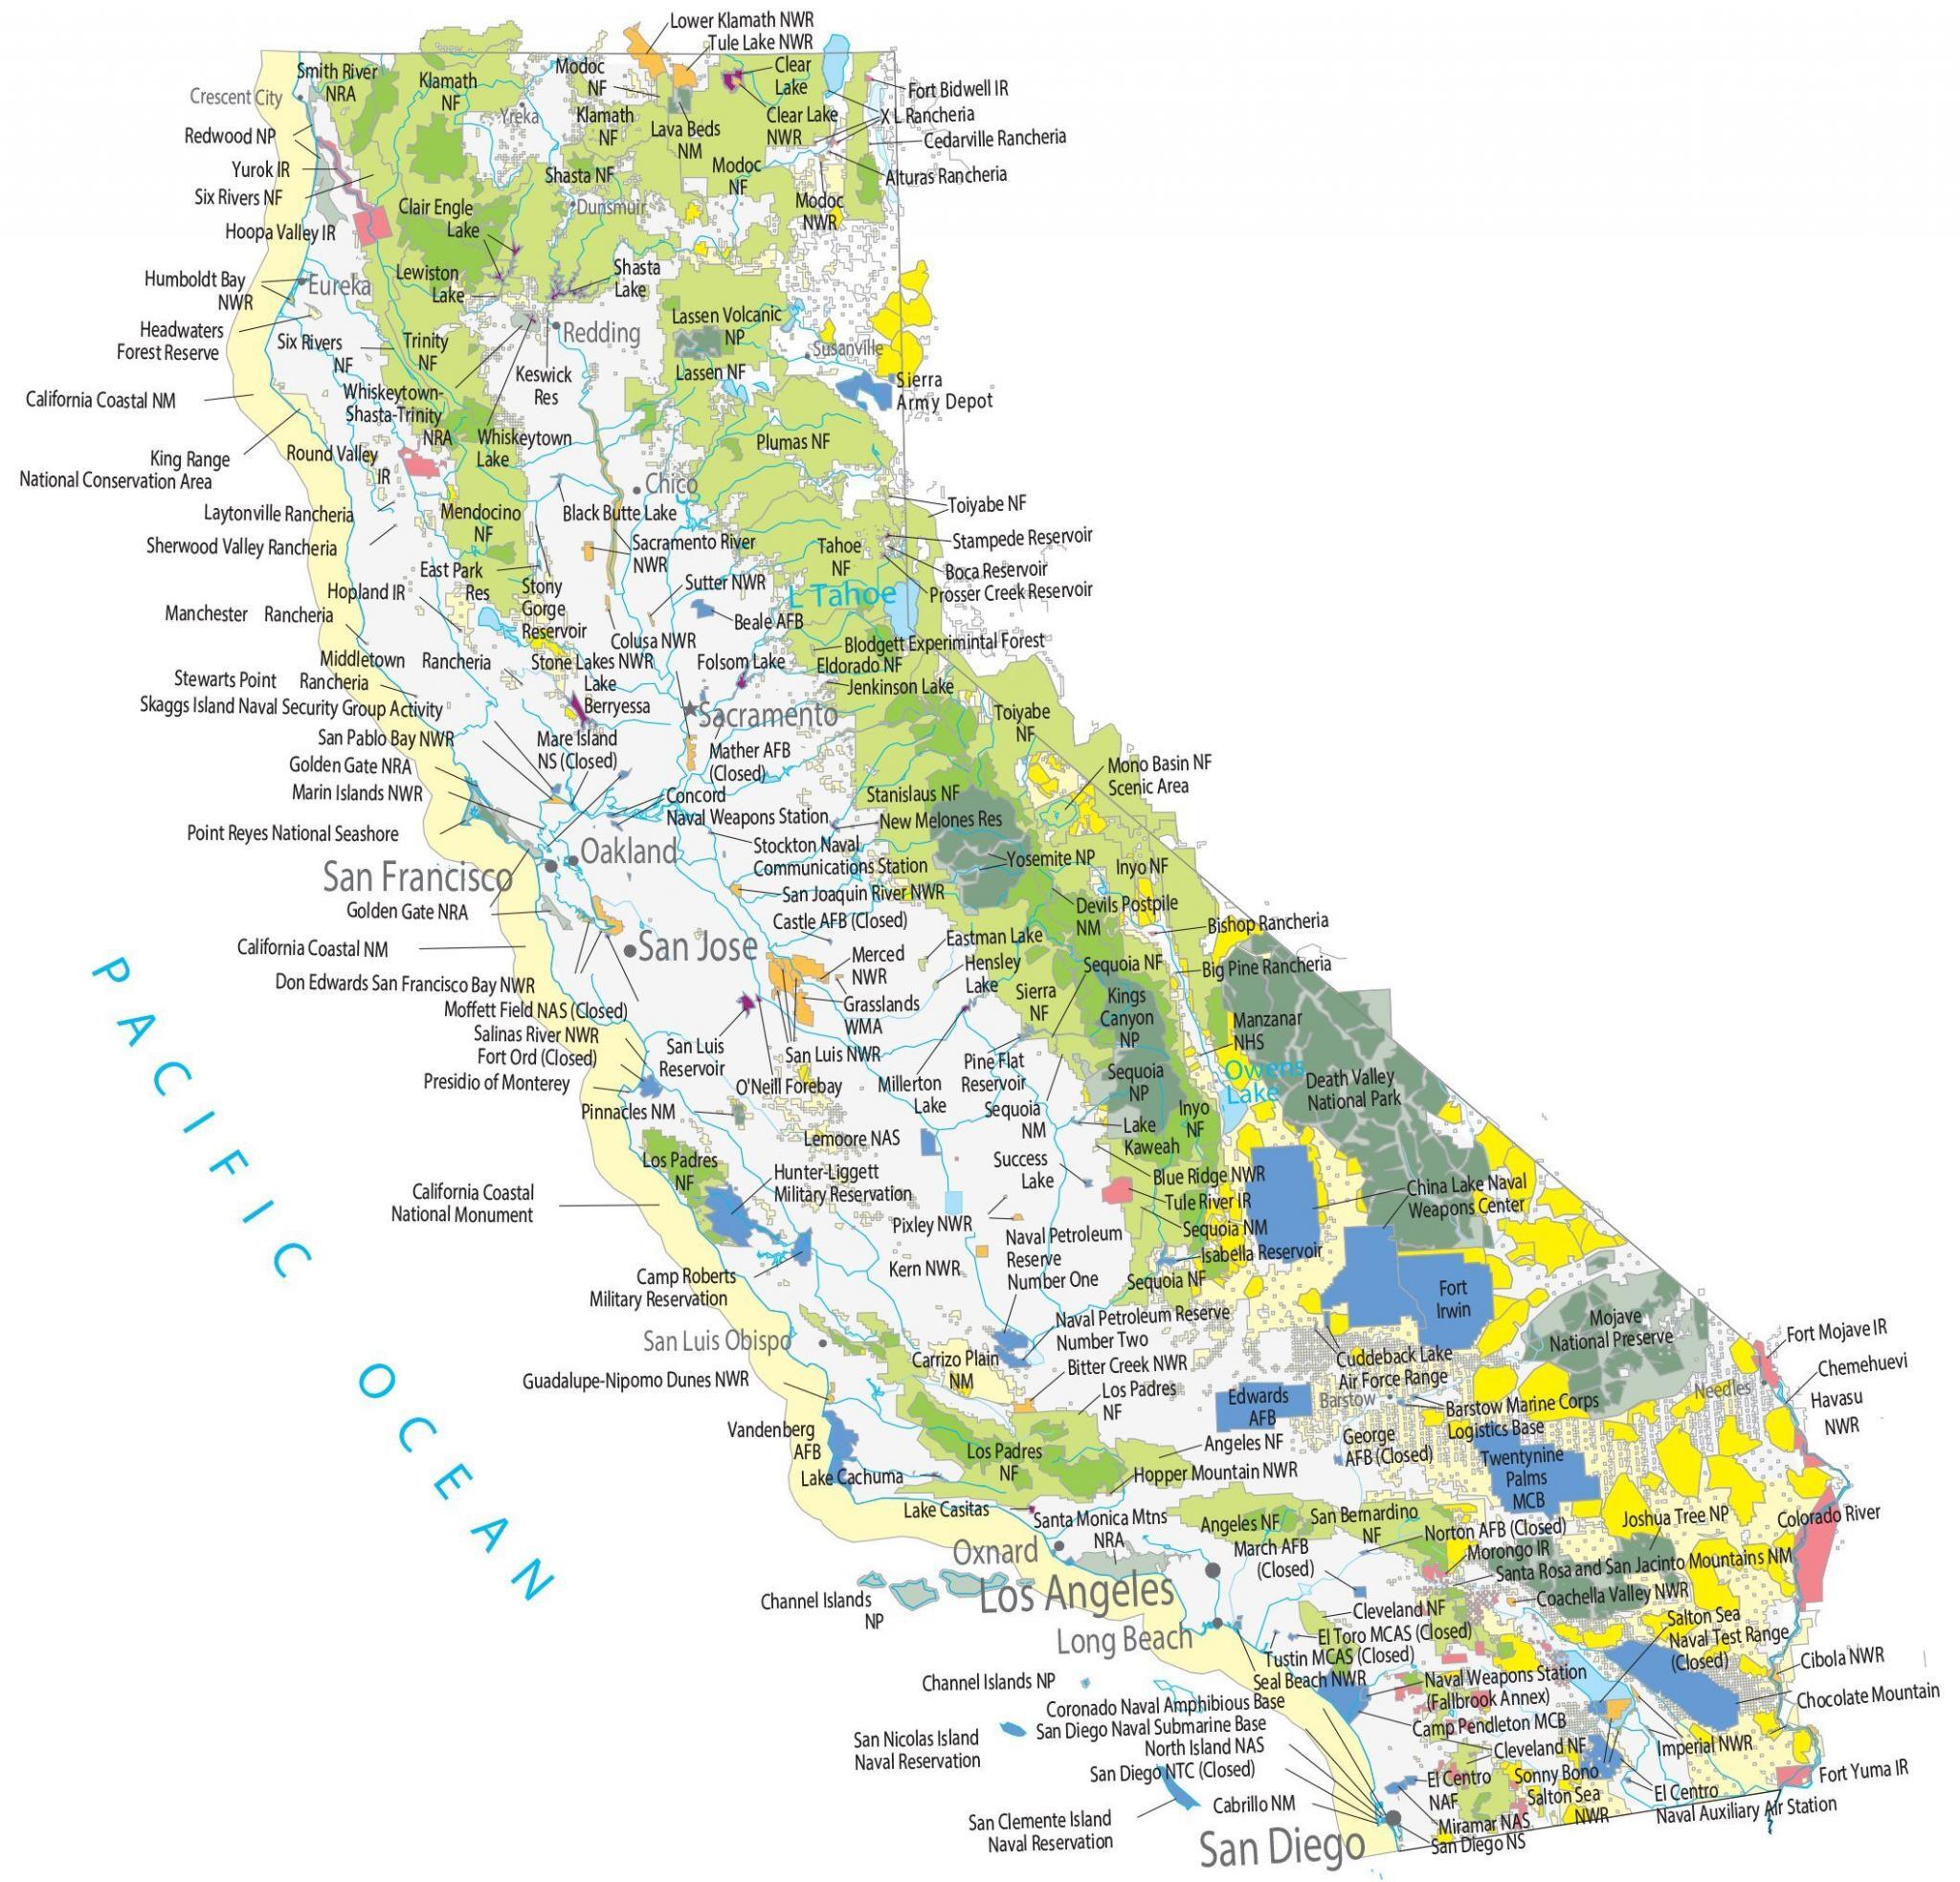 map of california cities